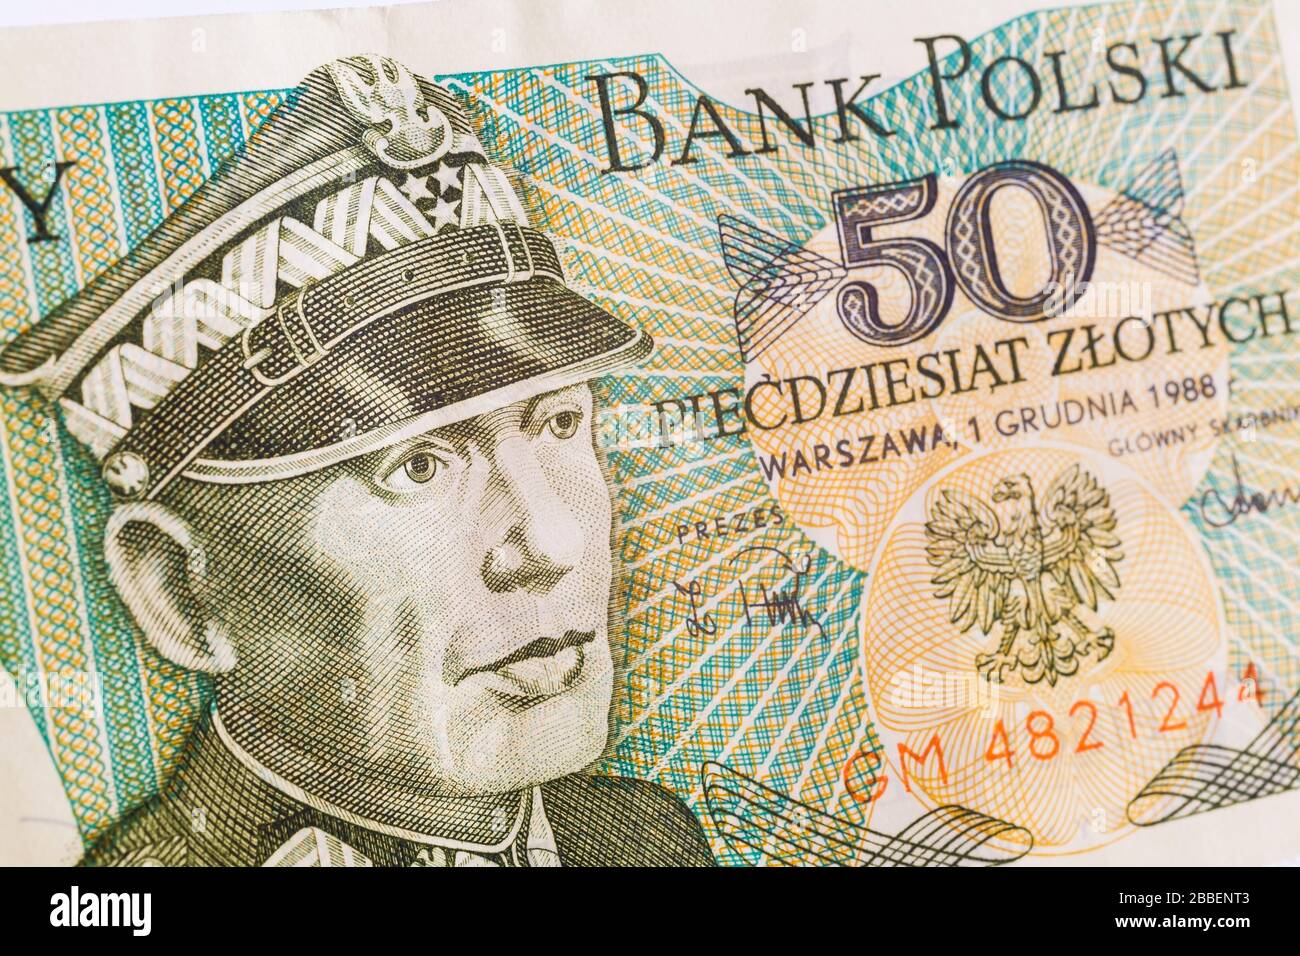 Old 1988 Polish 50 sloty paper currency banknote with portrait of Karol Swierczewski, Studio Composition, Quebec, Canada Stock Photo